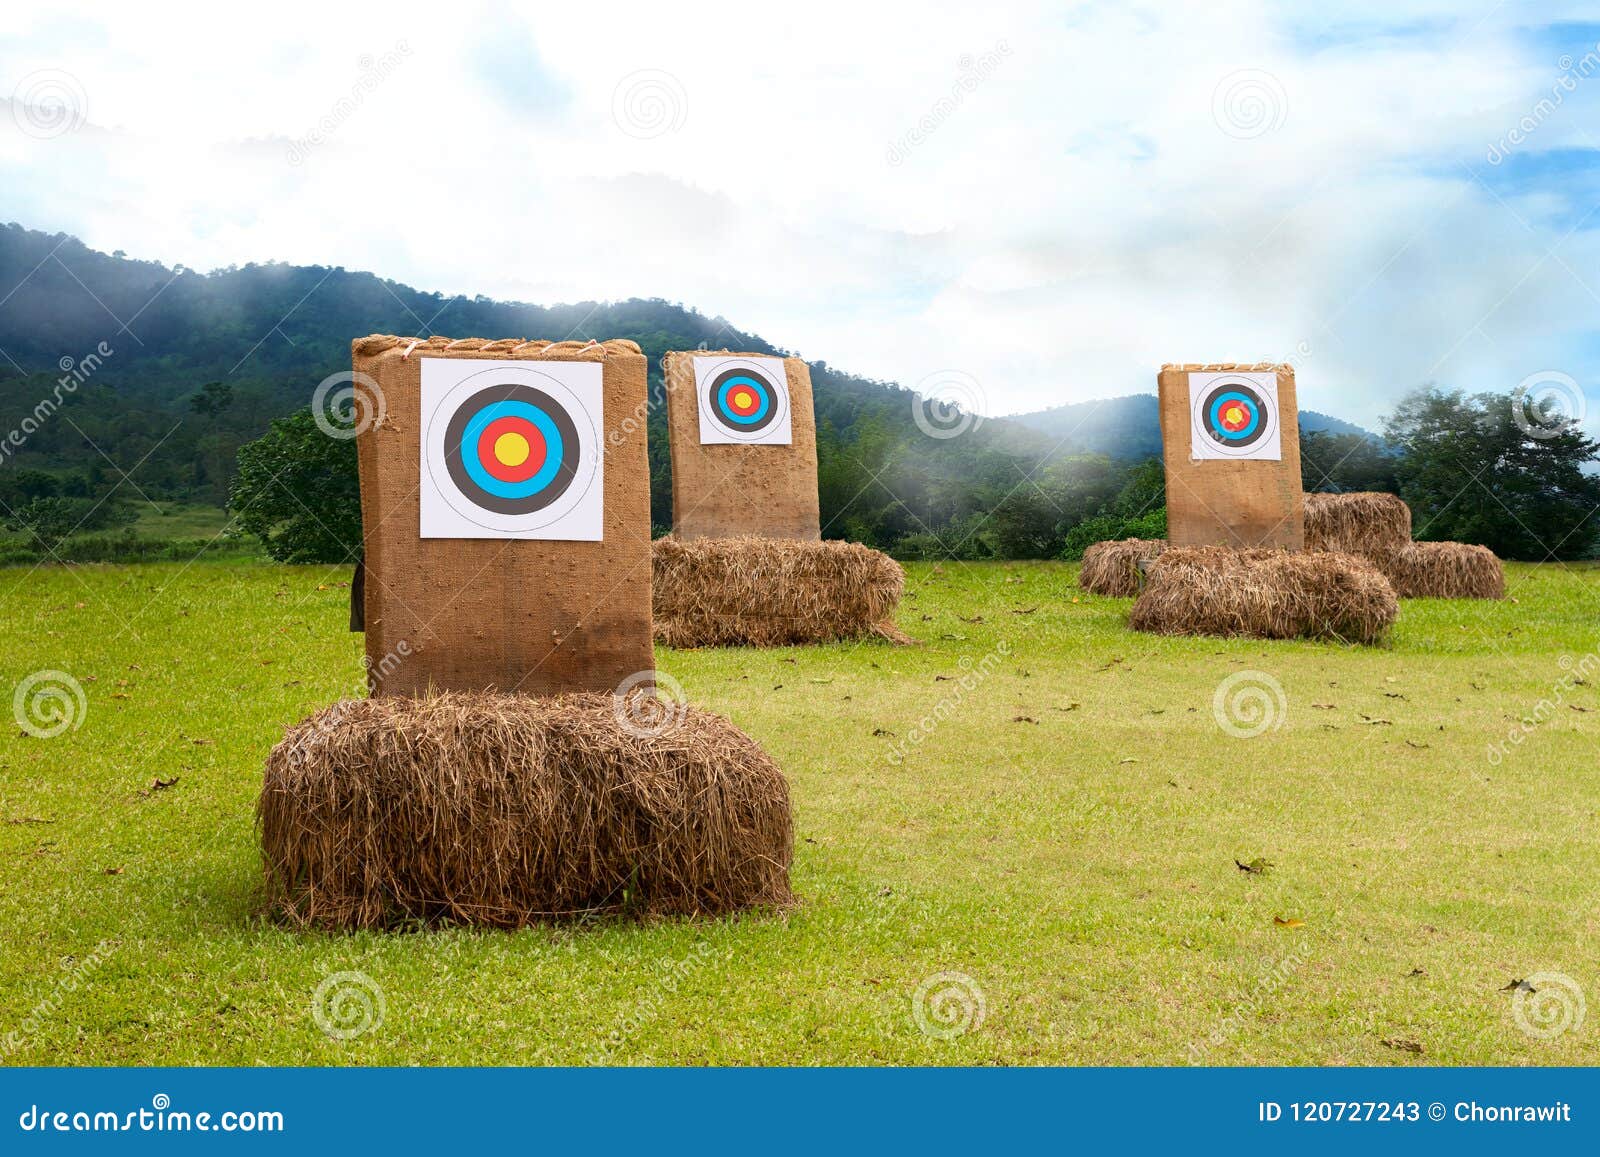 three archery target on the field